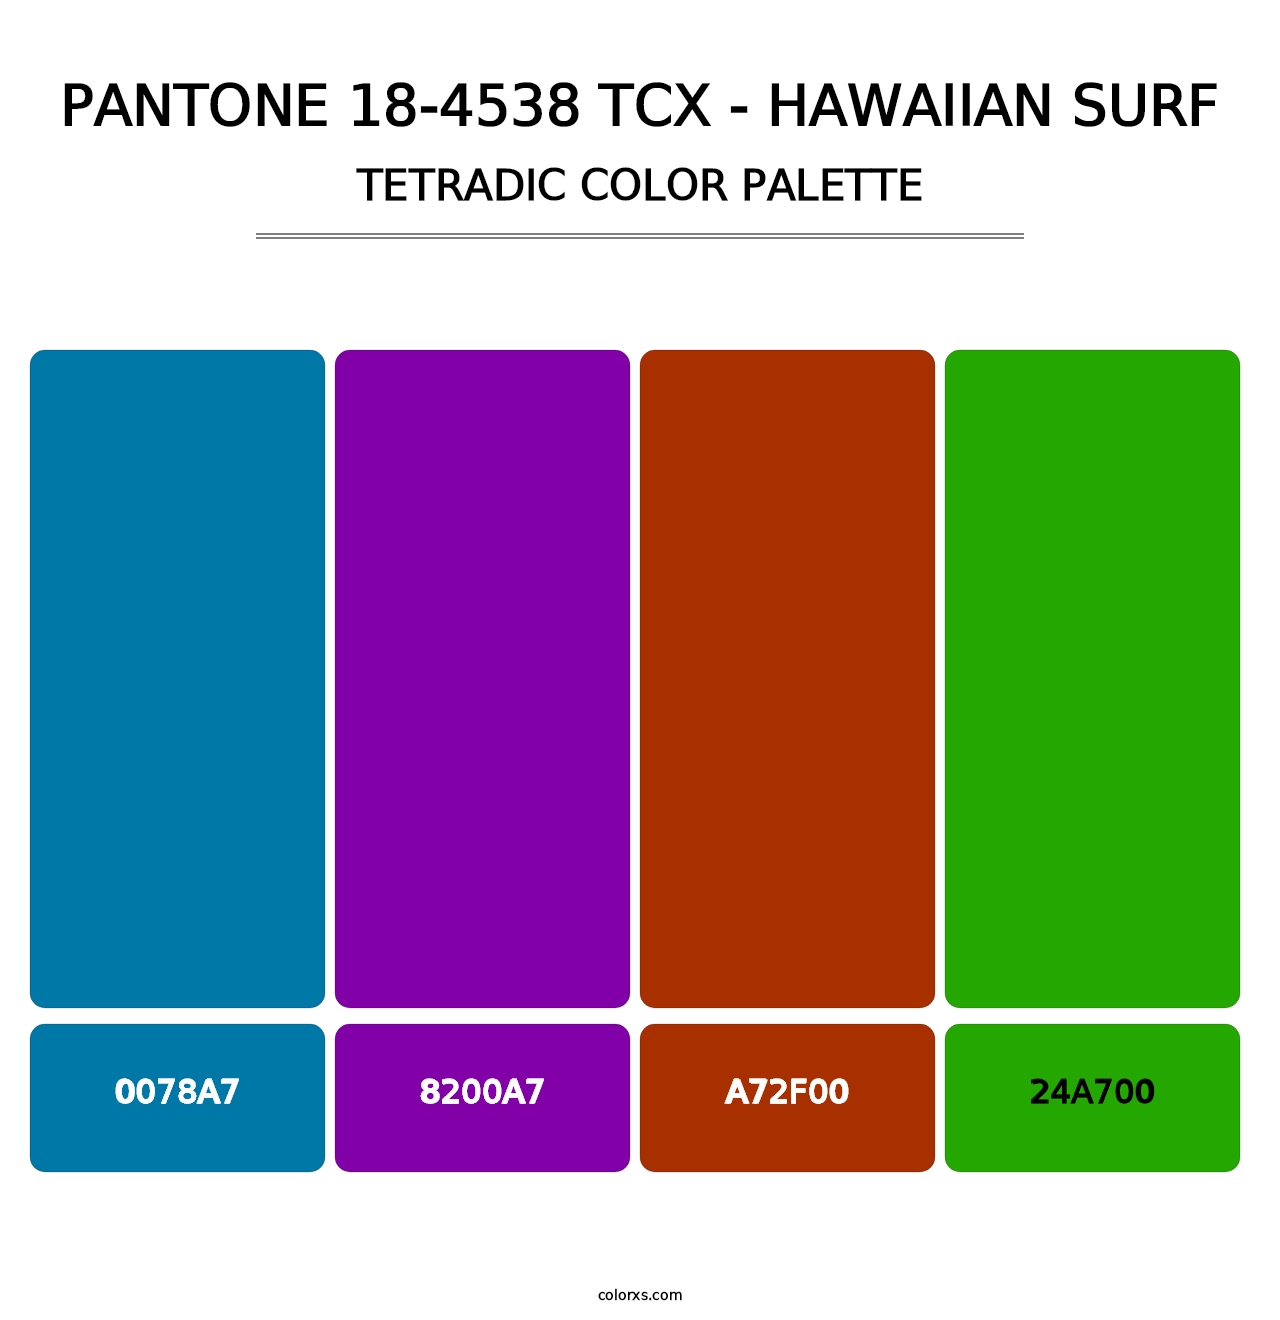 PANTONE 18-4538 TCX - Hawaiian Surf - Tetradic Color Palette